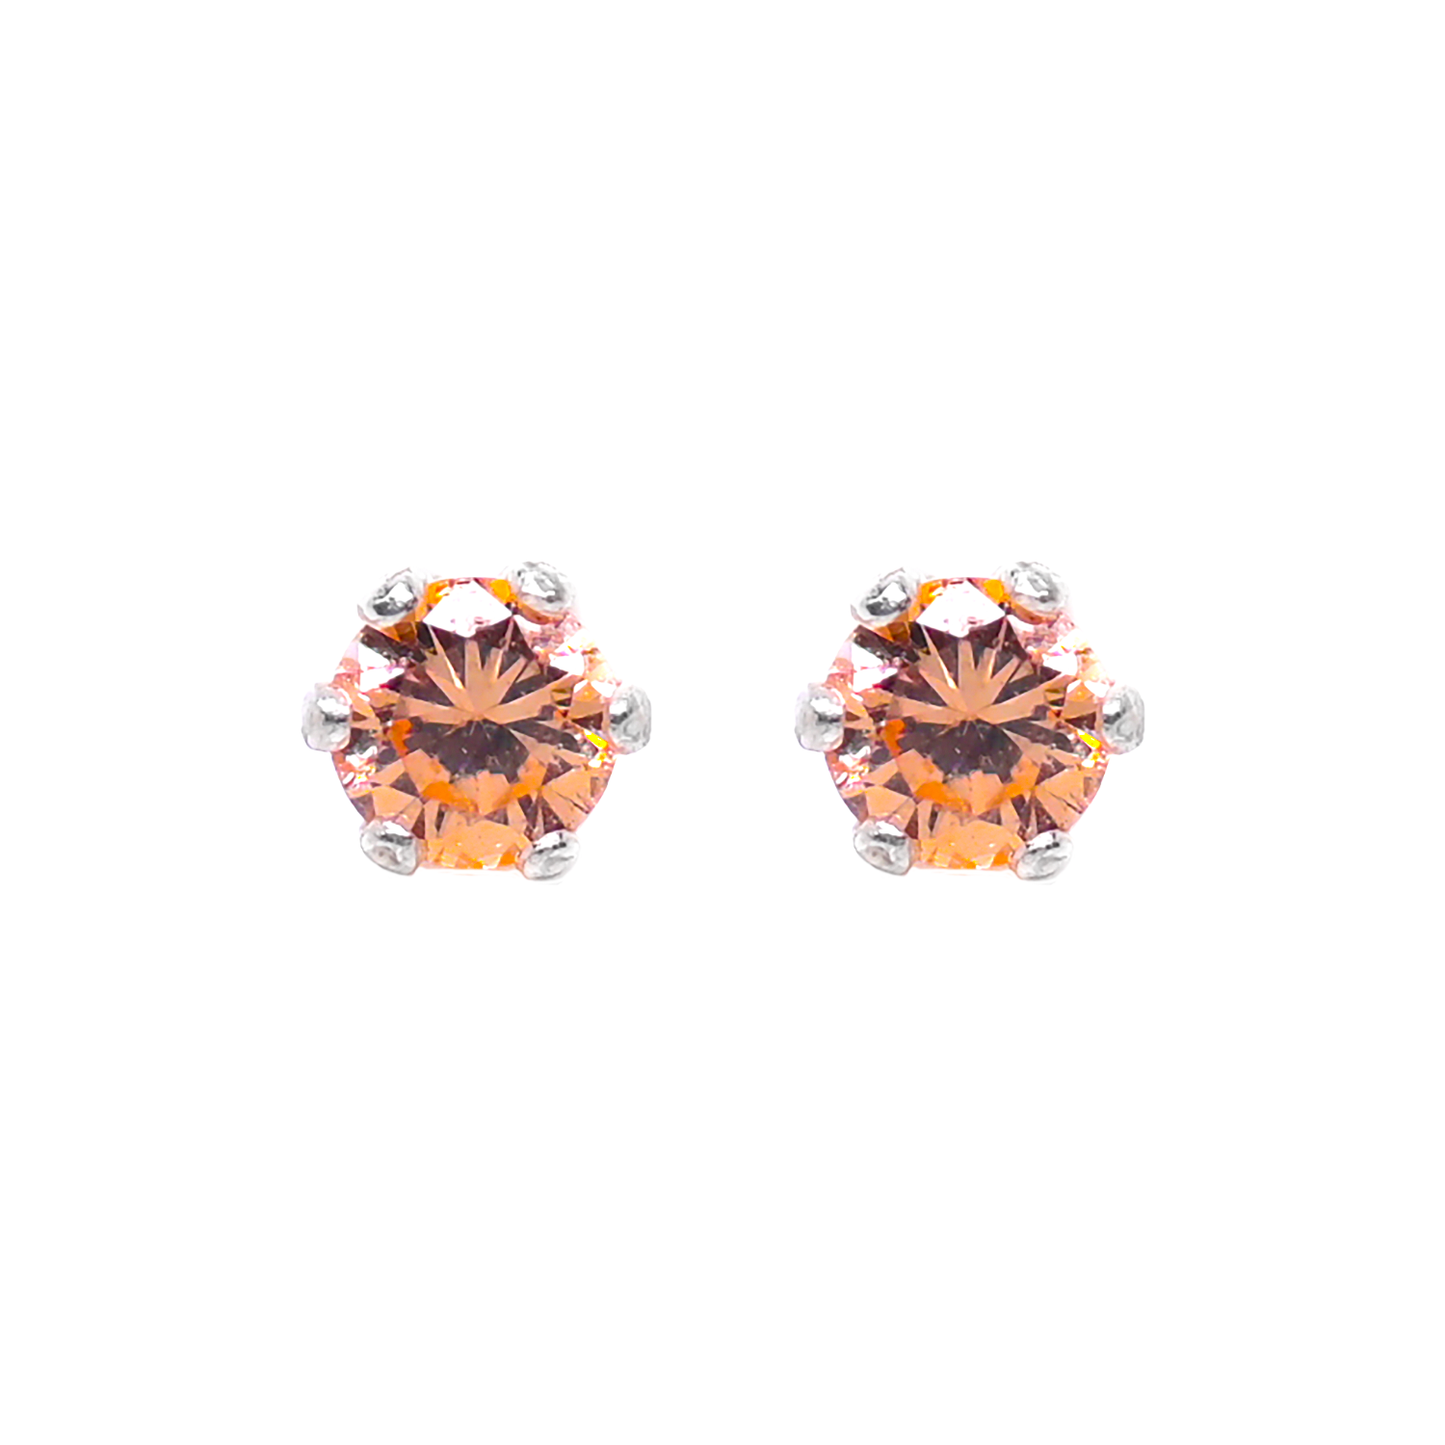 Ontique 925 Silver Apricot Orange Studs Earrings For Women